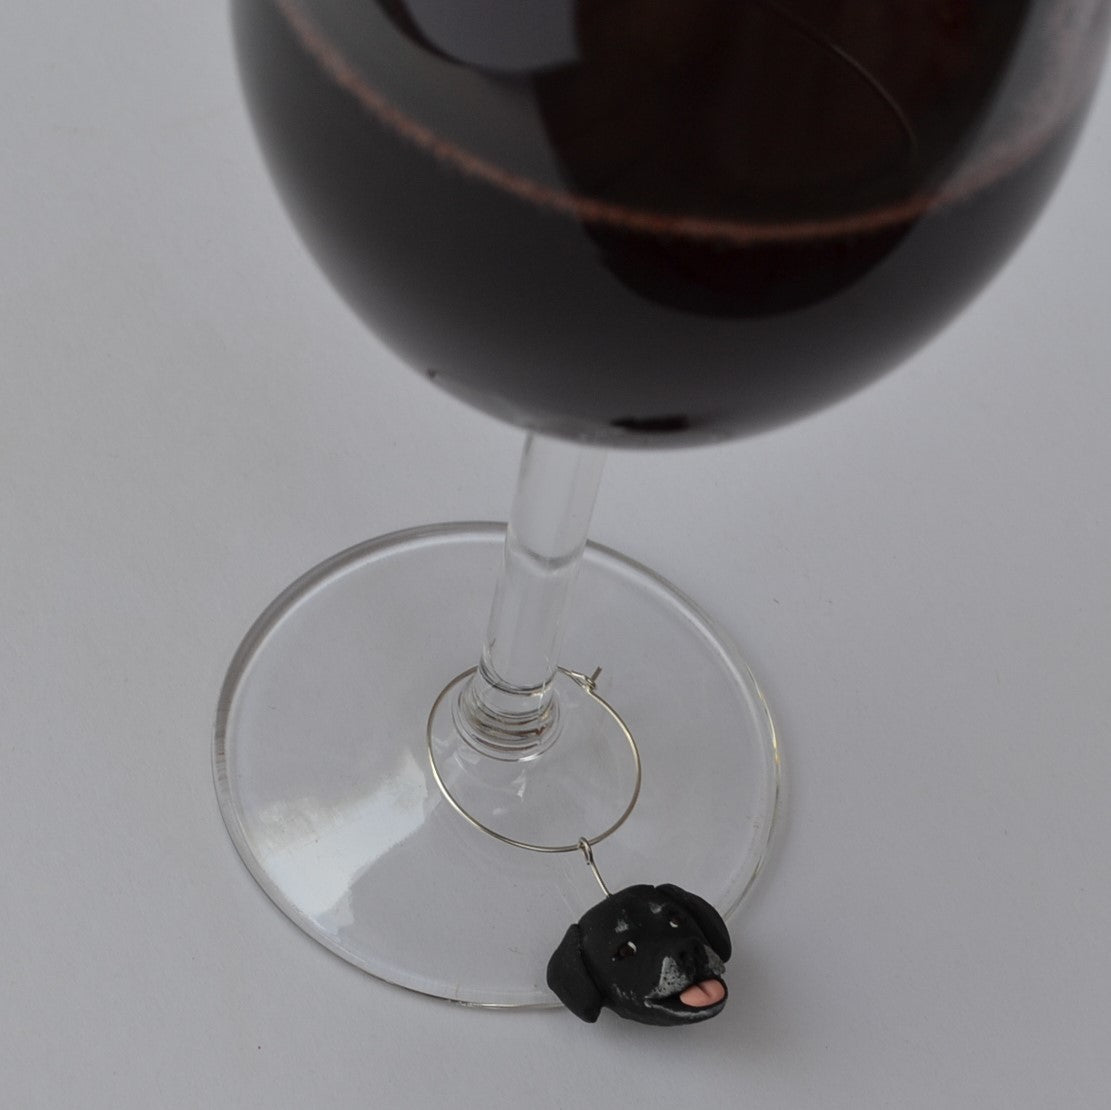 Handmade black labrador dog wine glass charm.